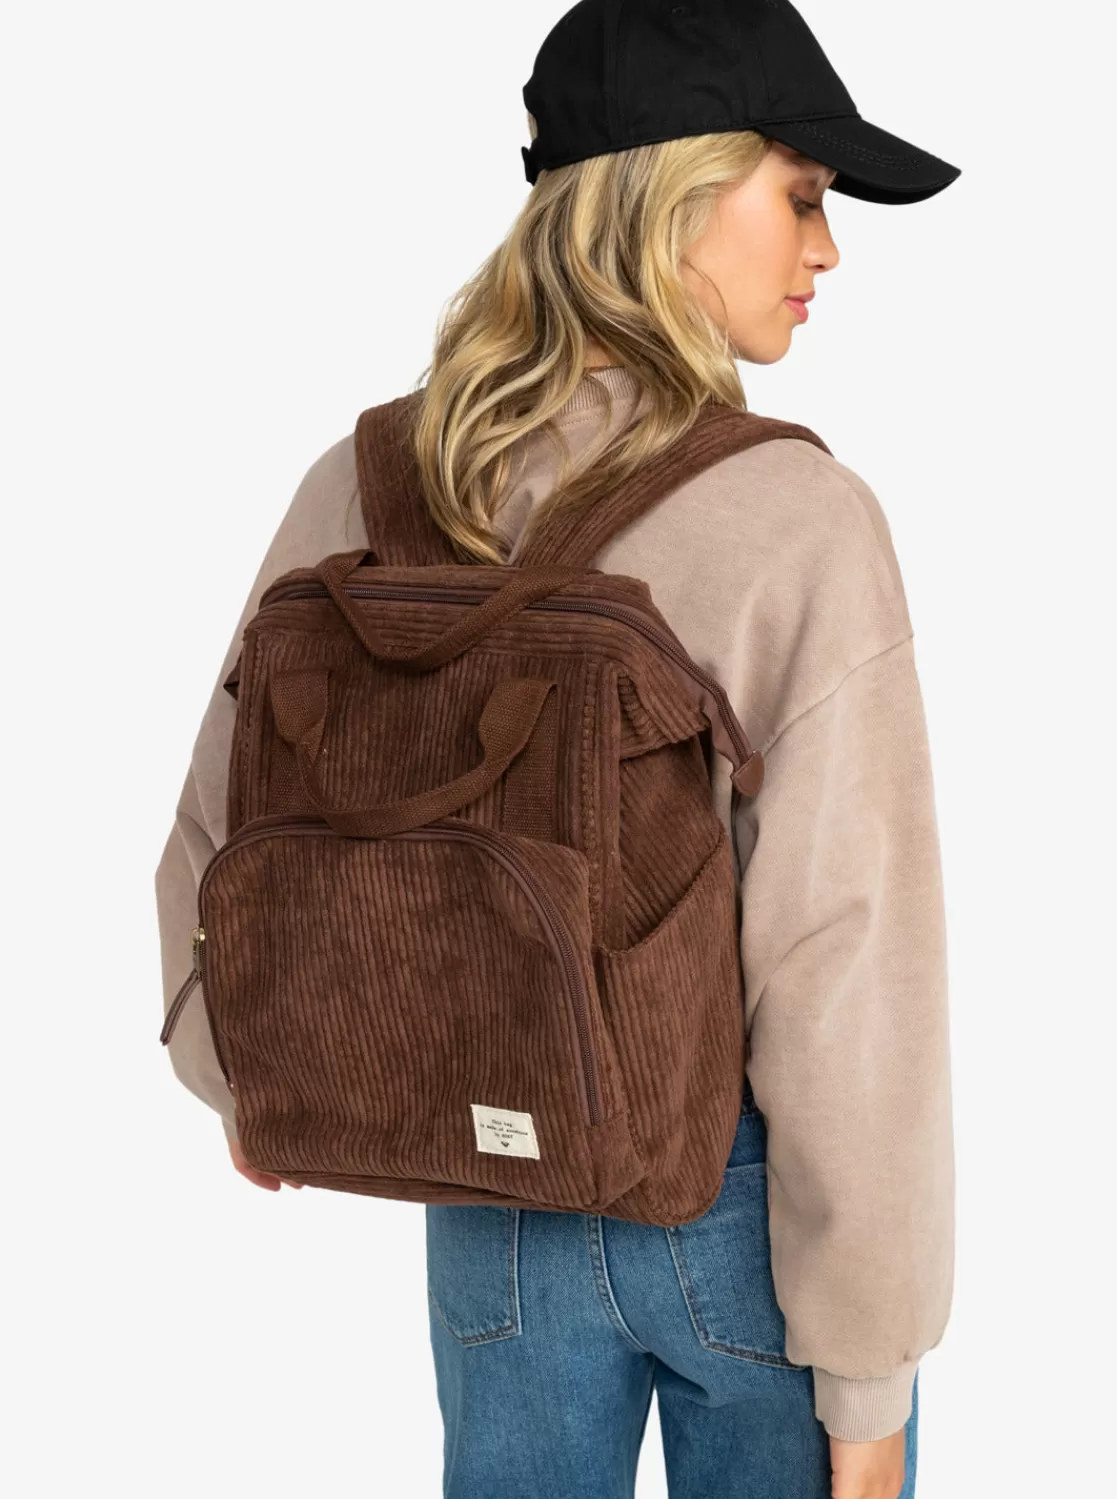 Cozy Nature Medium Corduroy Backpack-ROXY Fashion